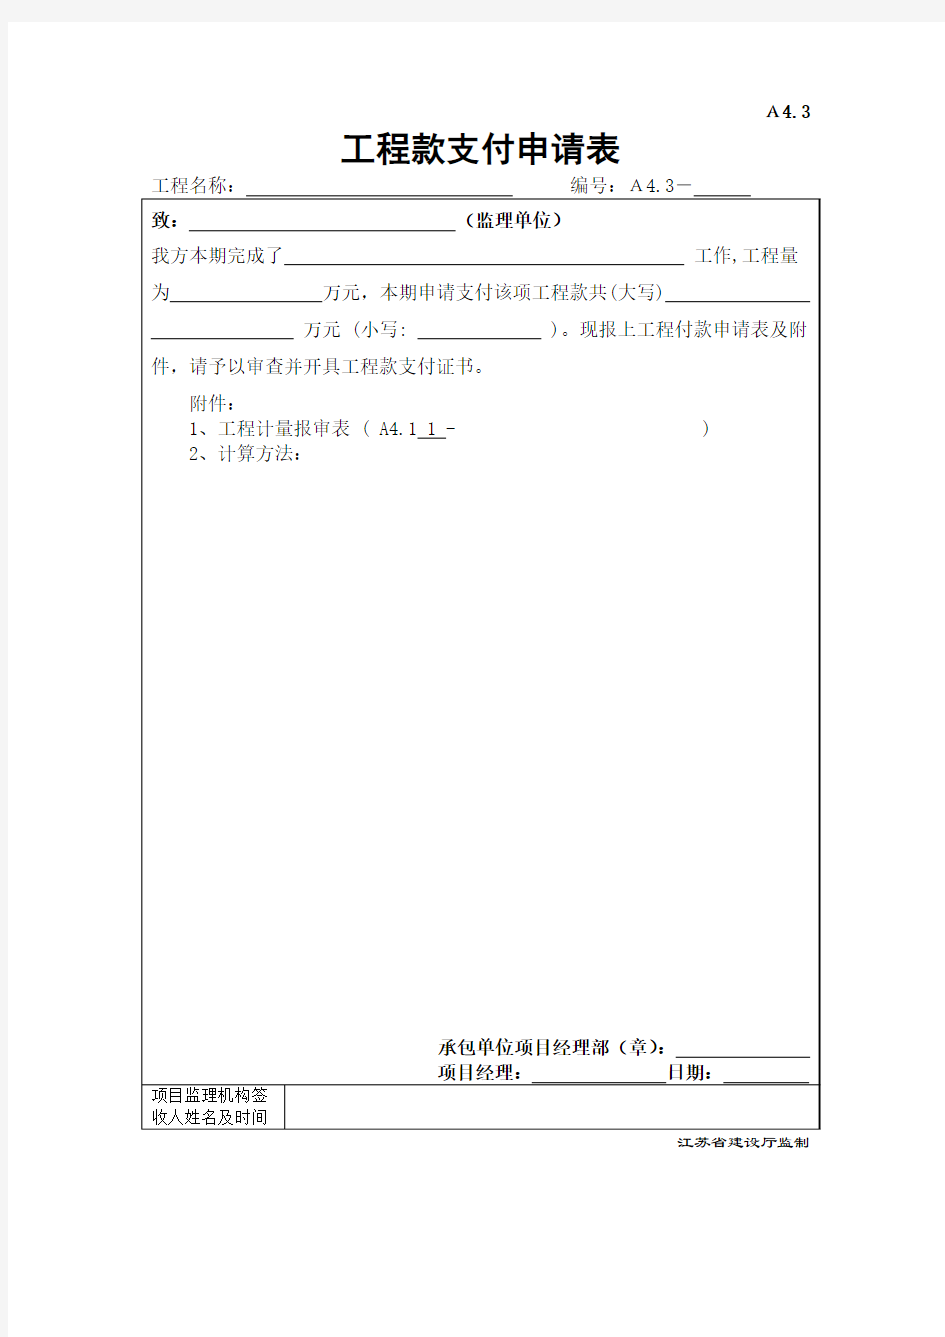 A4.3 工程款支付申请表(江苏省建设厅监制)